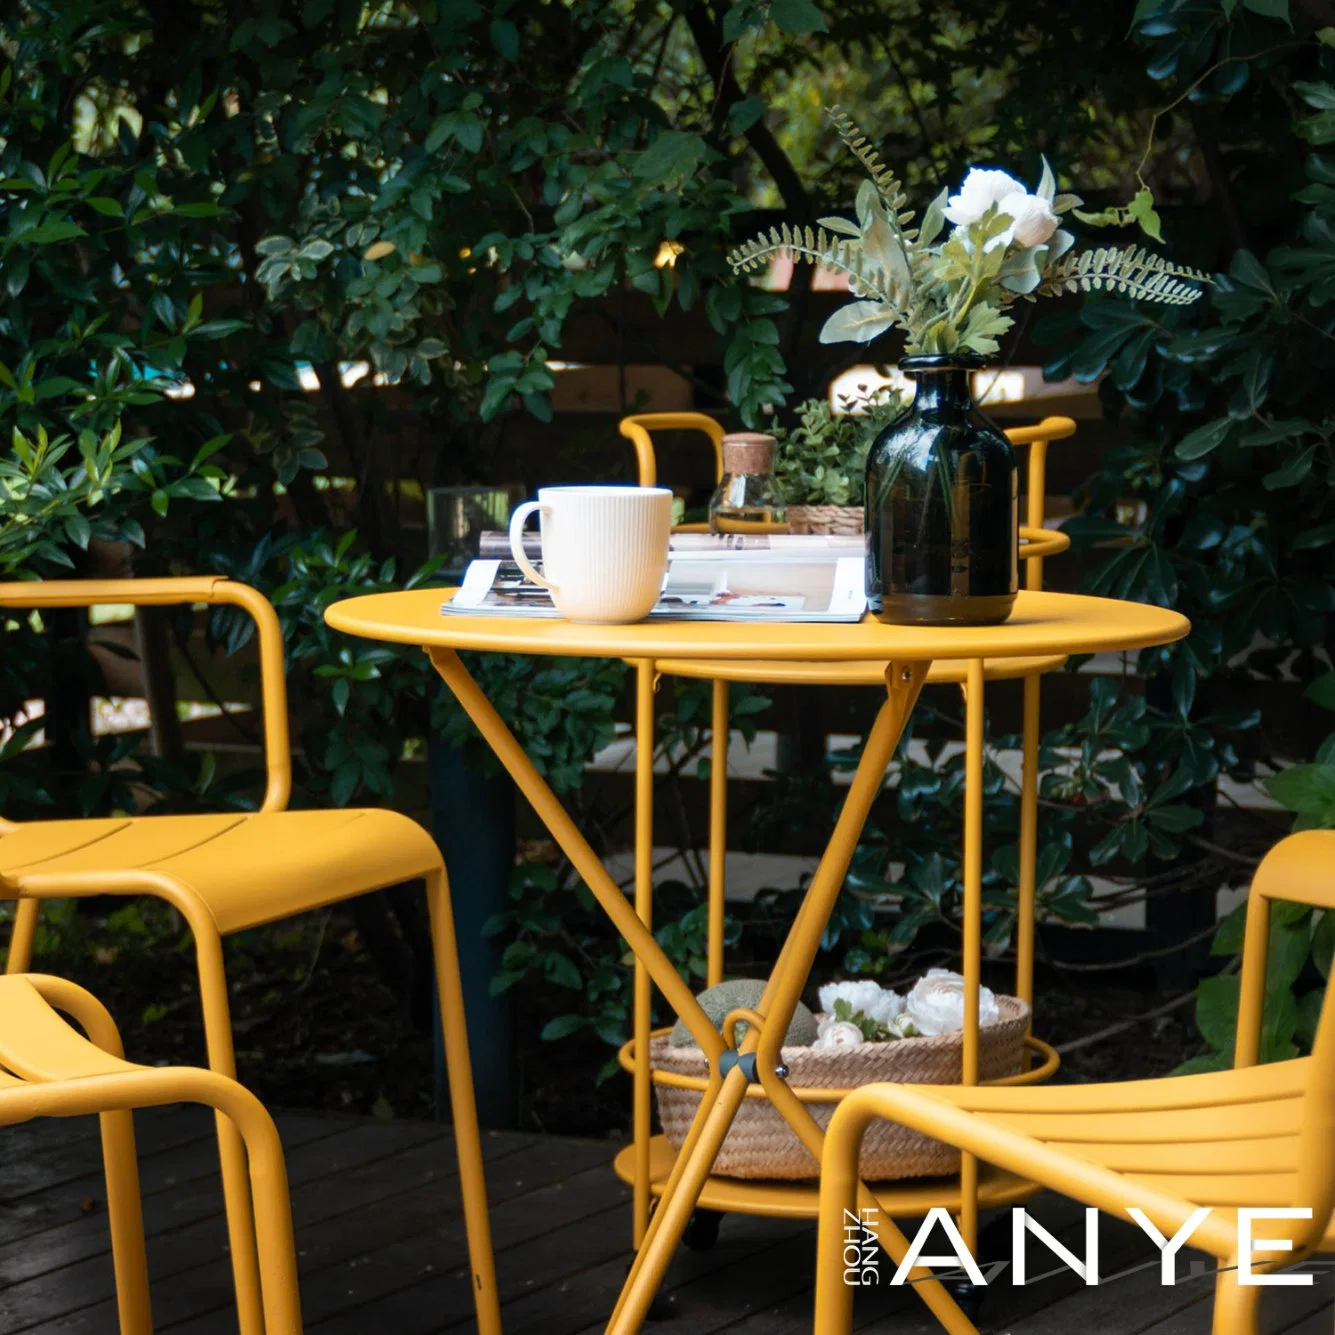 Firme y durable Metal Café Muebles Amarillo tres patas Café Mesa de comedor de té al aire libre